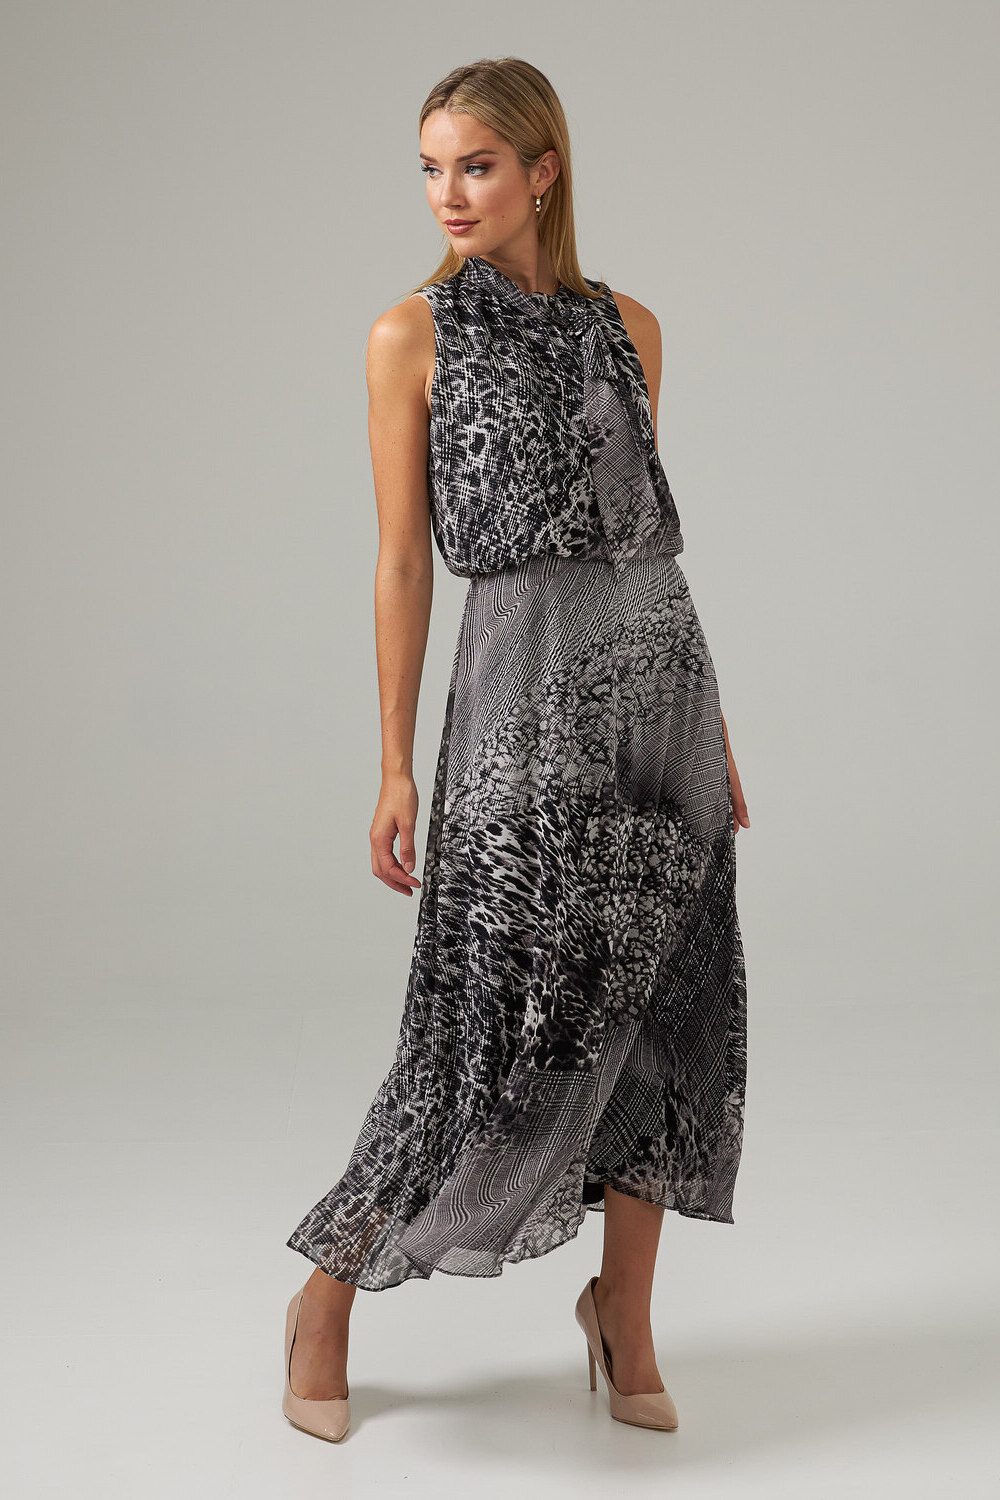 Joseph Ribkoff Mixed Print Dress Style 203424. Black/vanilla